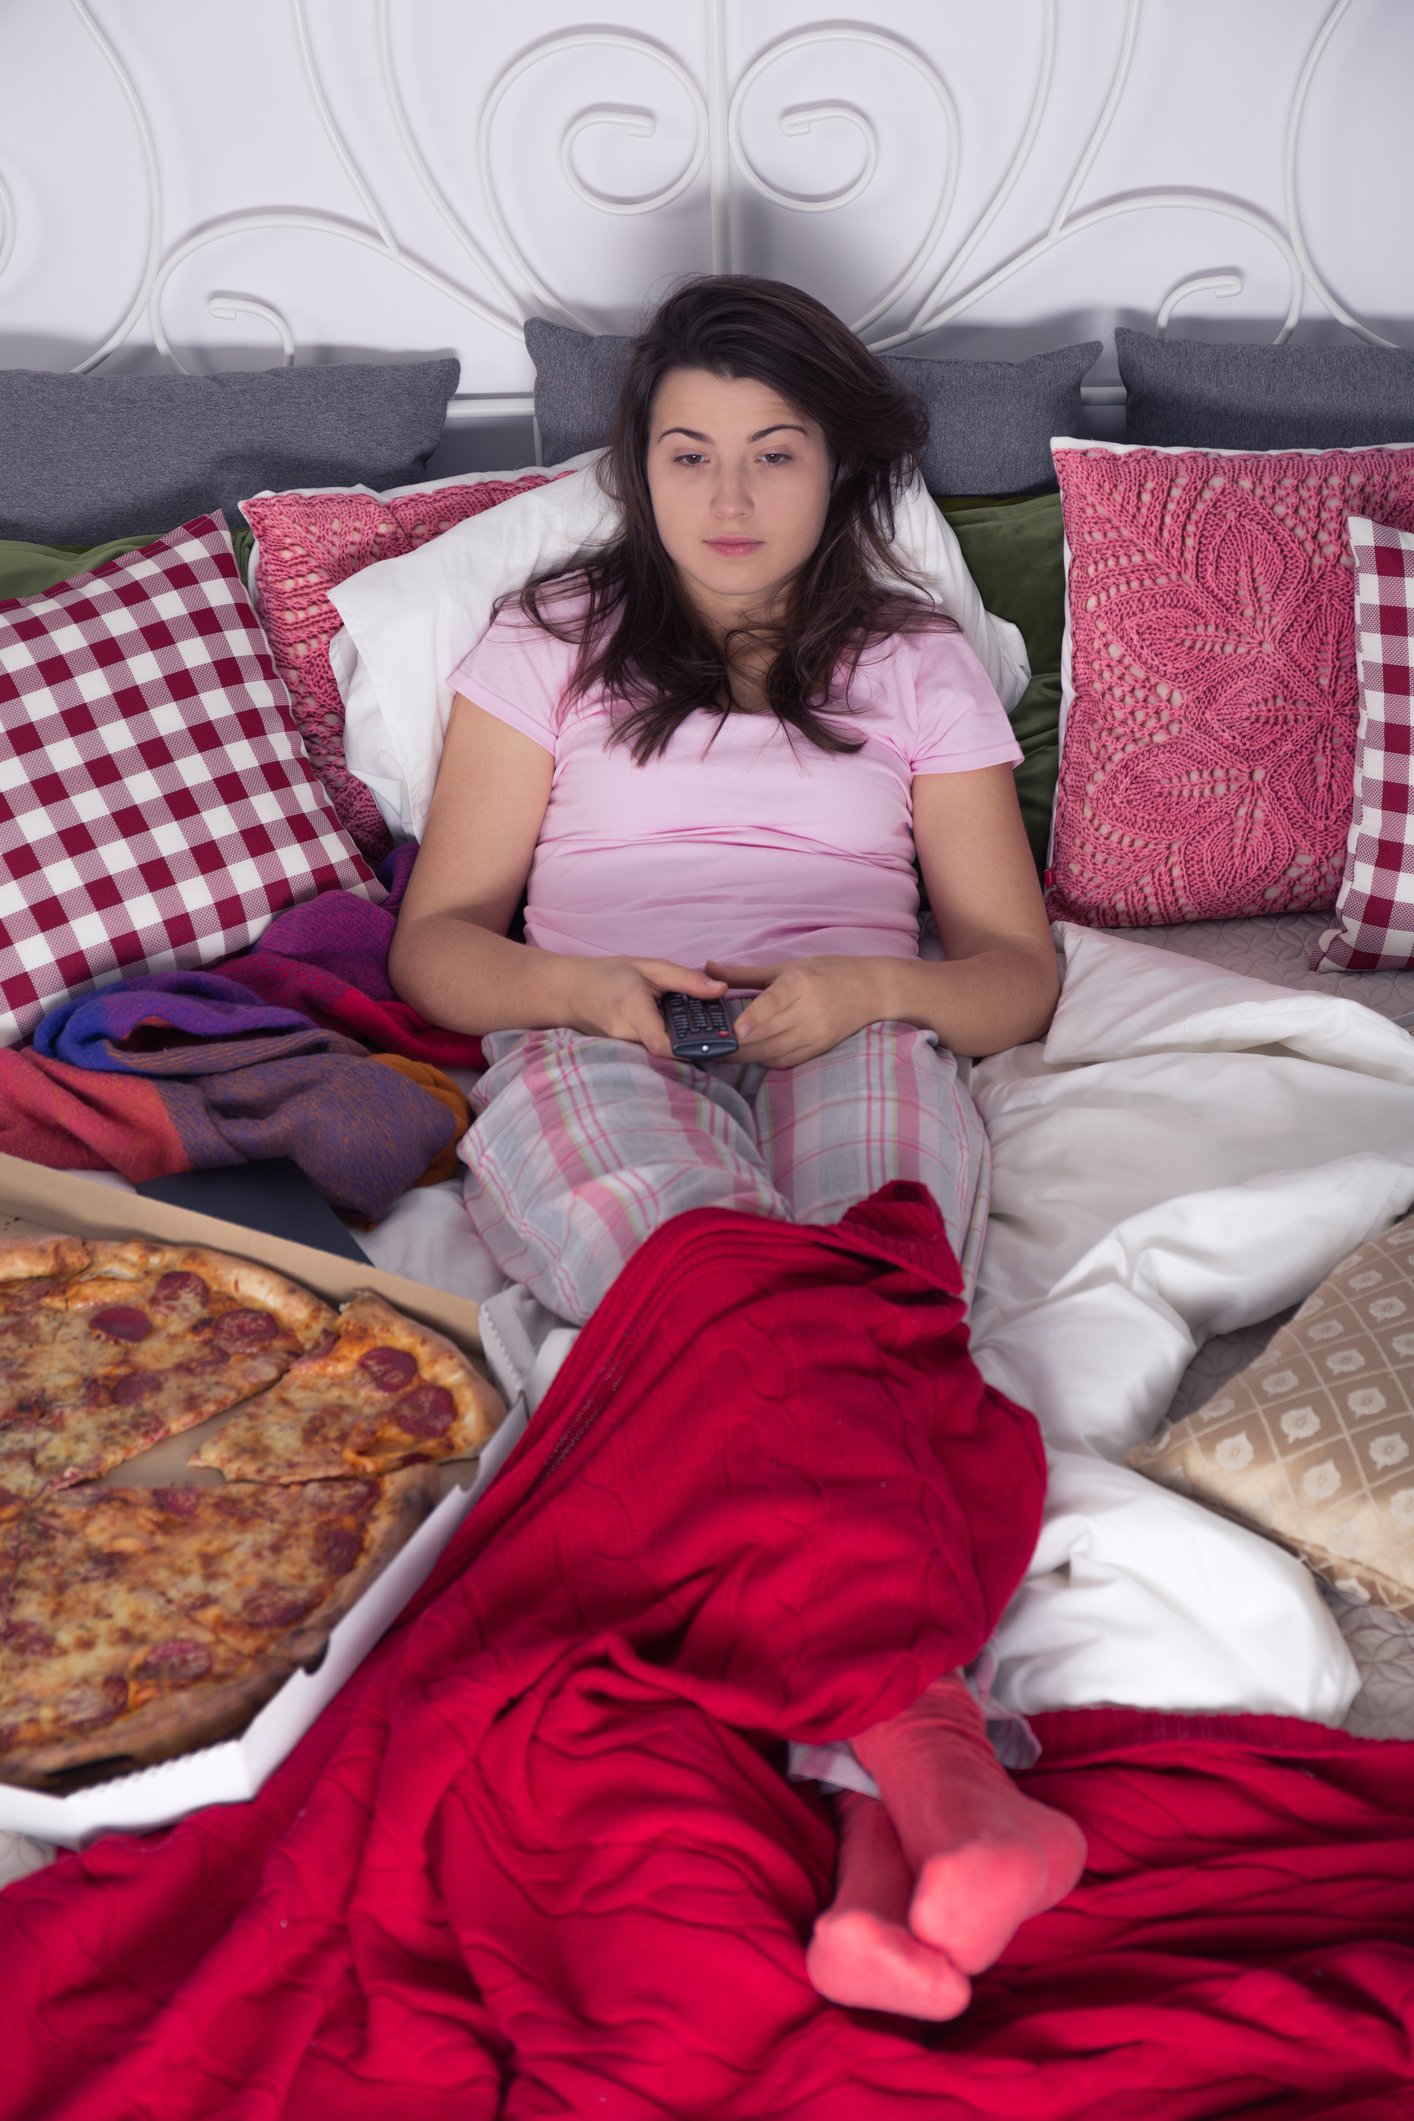 Frau isst Pizza im Bett